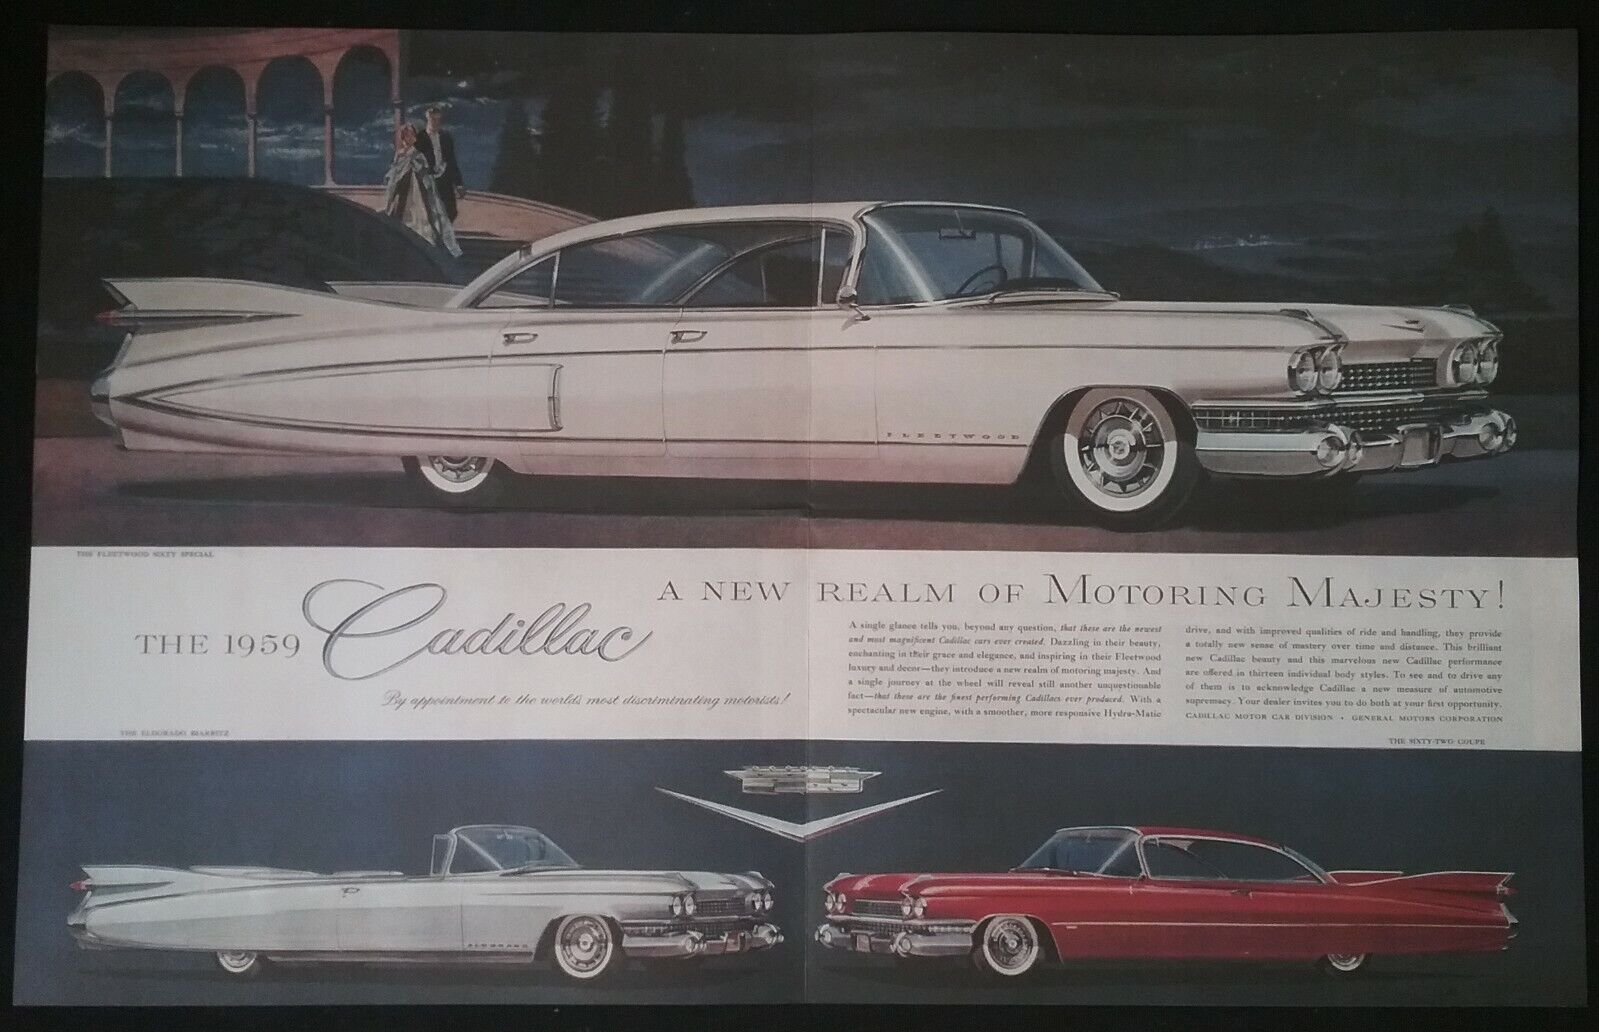  1959 CADILLAC ADVERTISING POSTER ,  AMERICAN CAR HISTORY  (13)